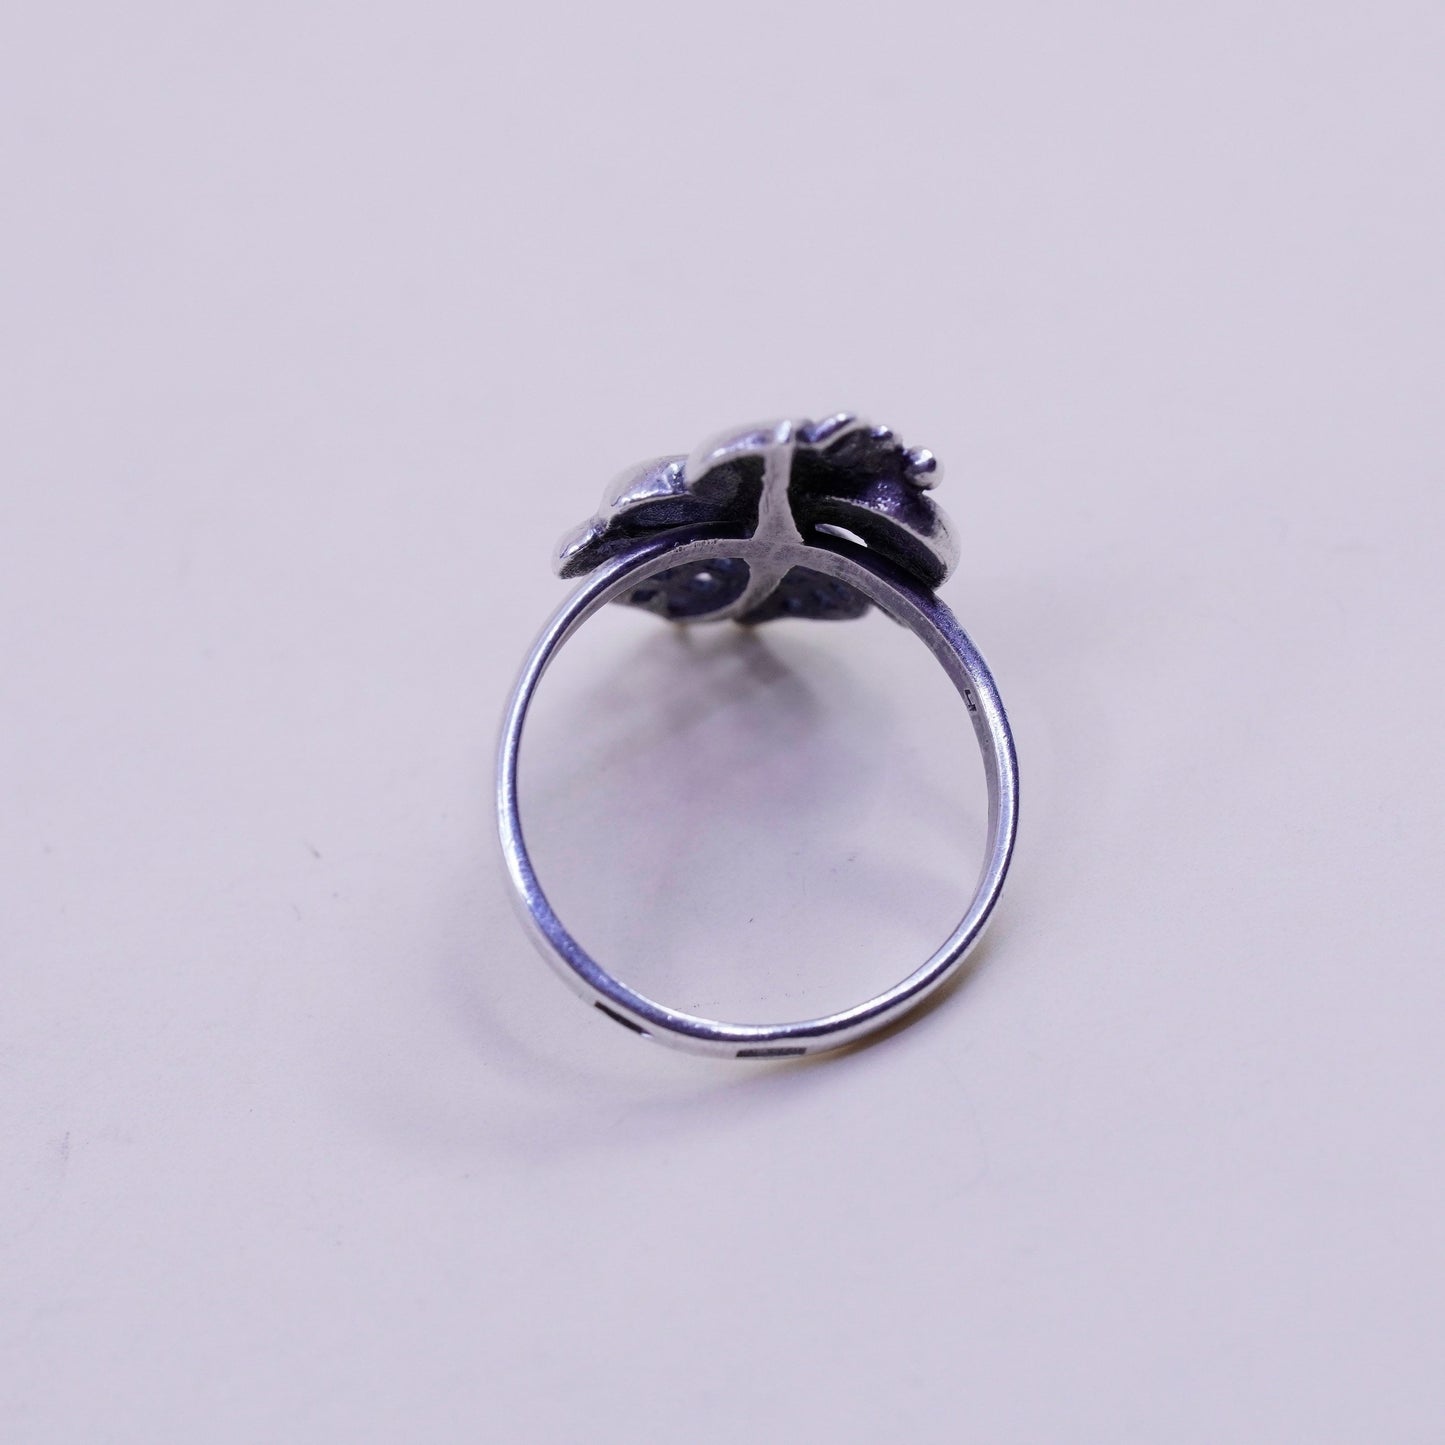 Size 8, vintage Sterling 925 silver handmade flower ring